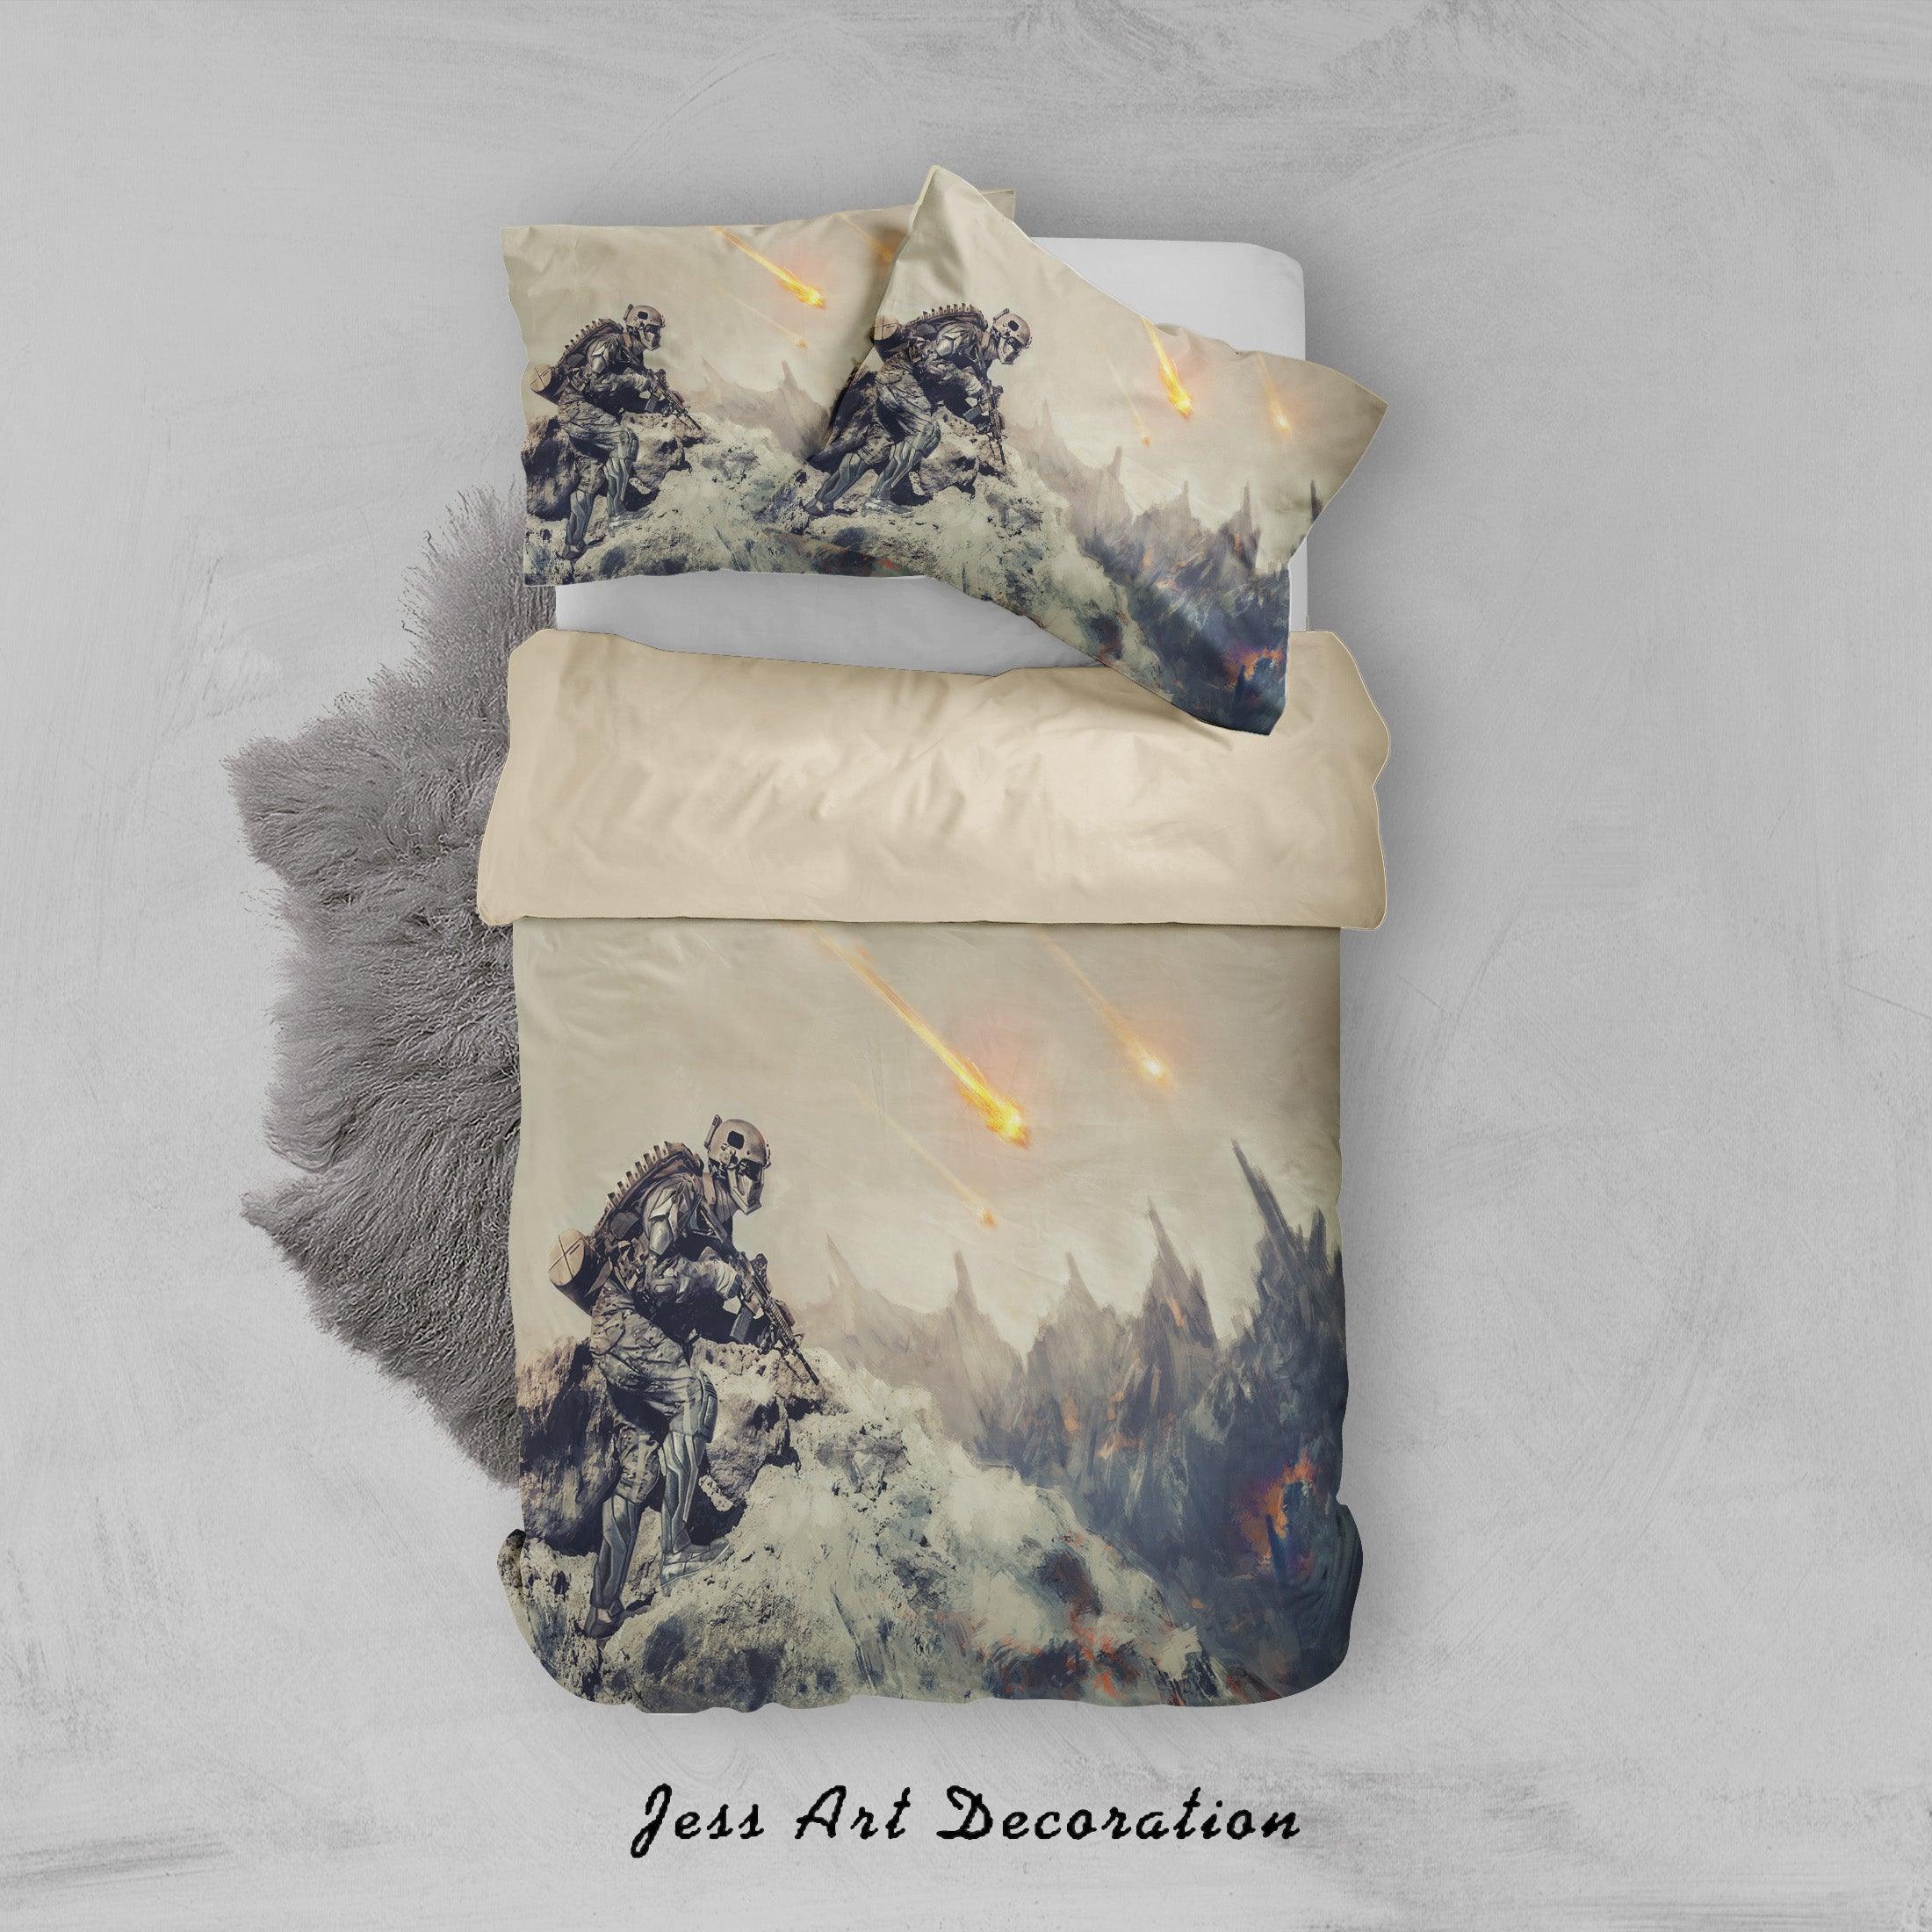 3D War Alien Planet Quilt Cover Set Bedding Set Duvet Cover Pillowcases A066 LQH- Jess Art Decoration